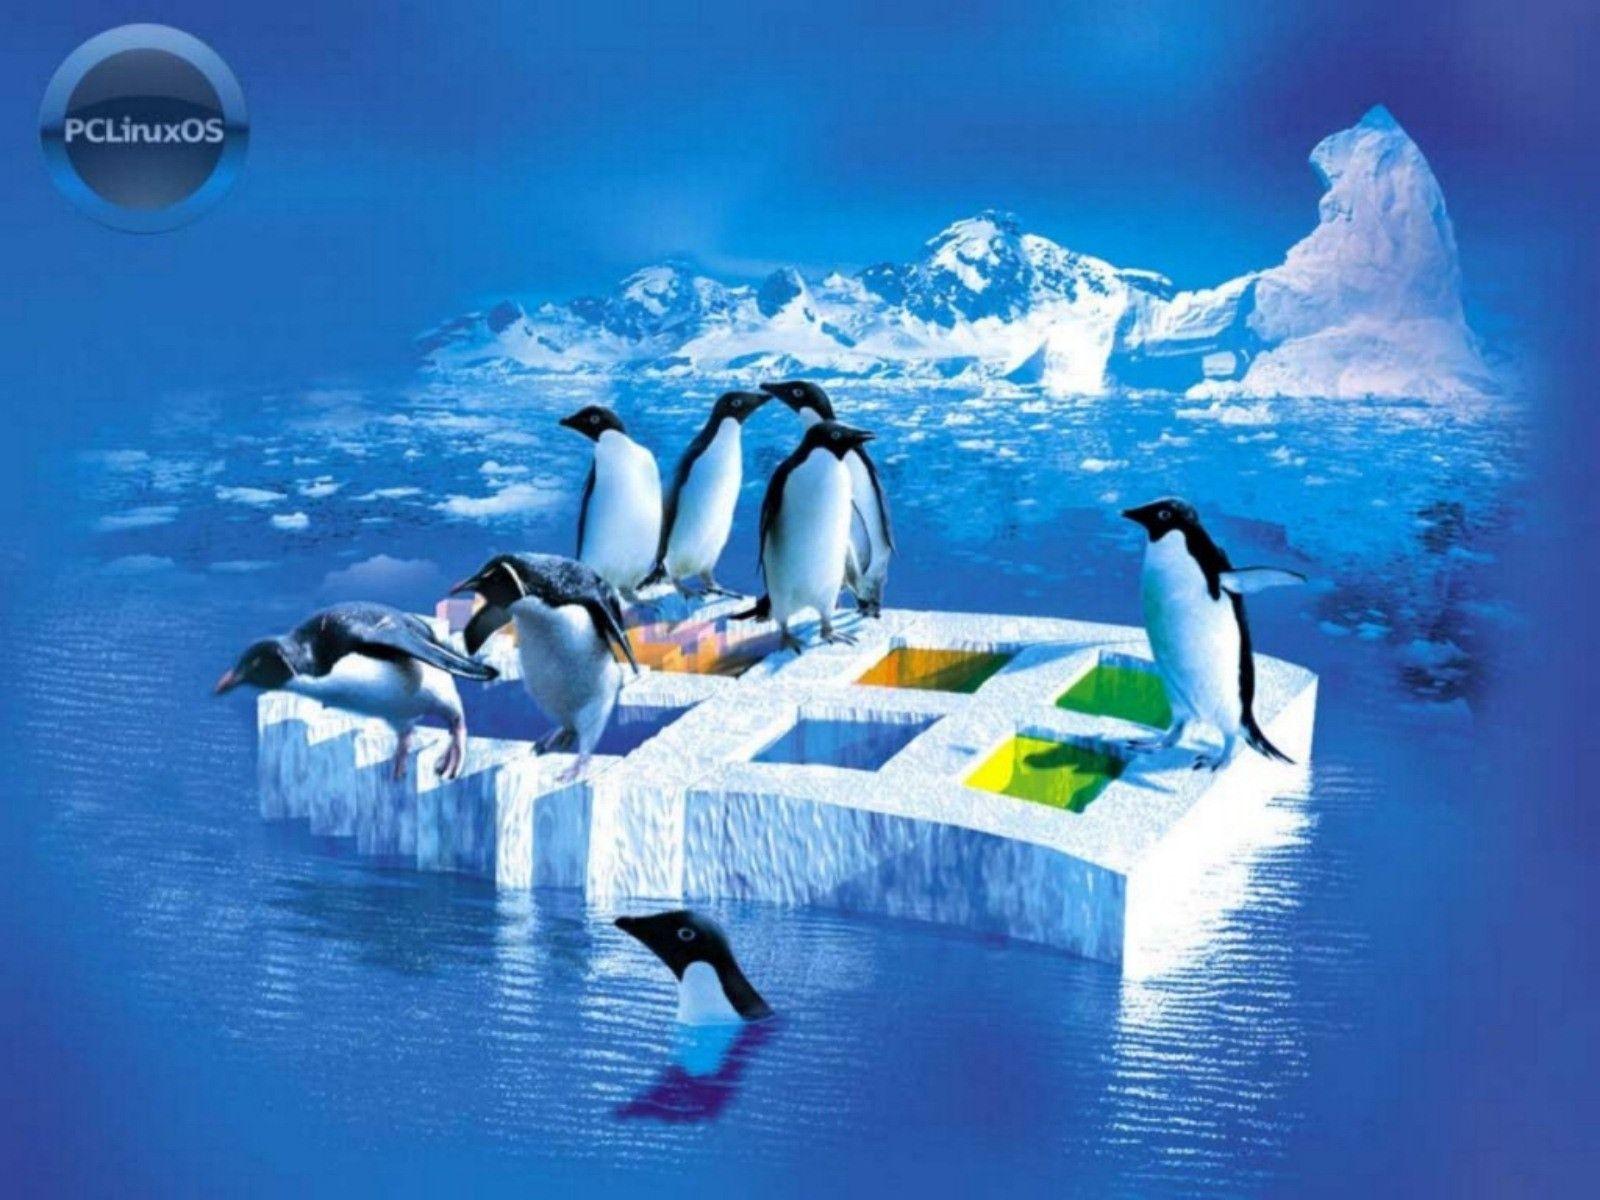 PcLinux Winter Wallpaper Desktop Pc Linux Antartica Use Open